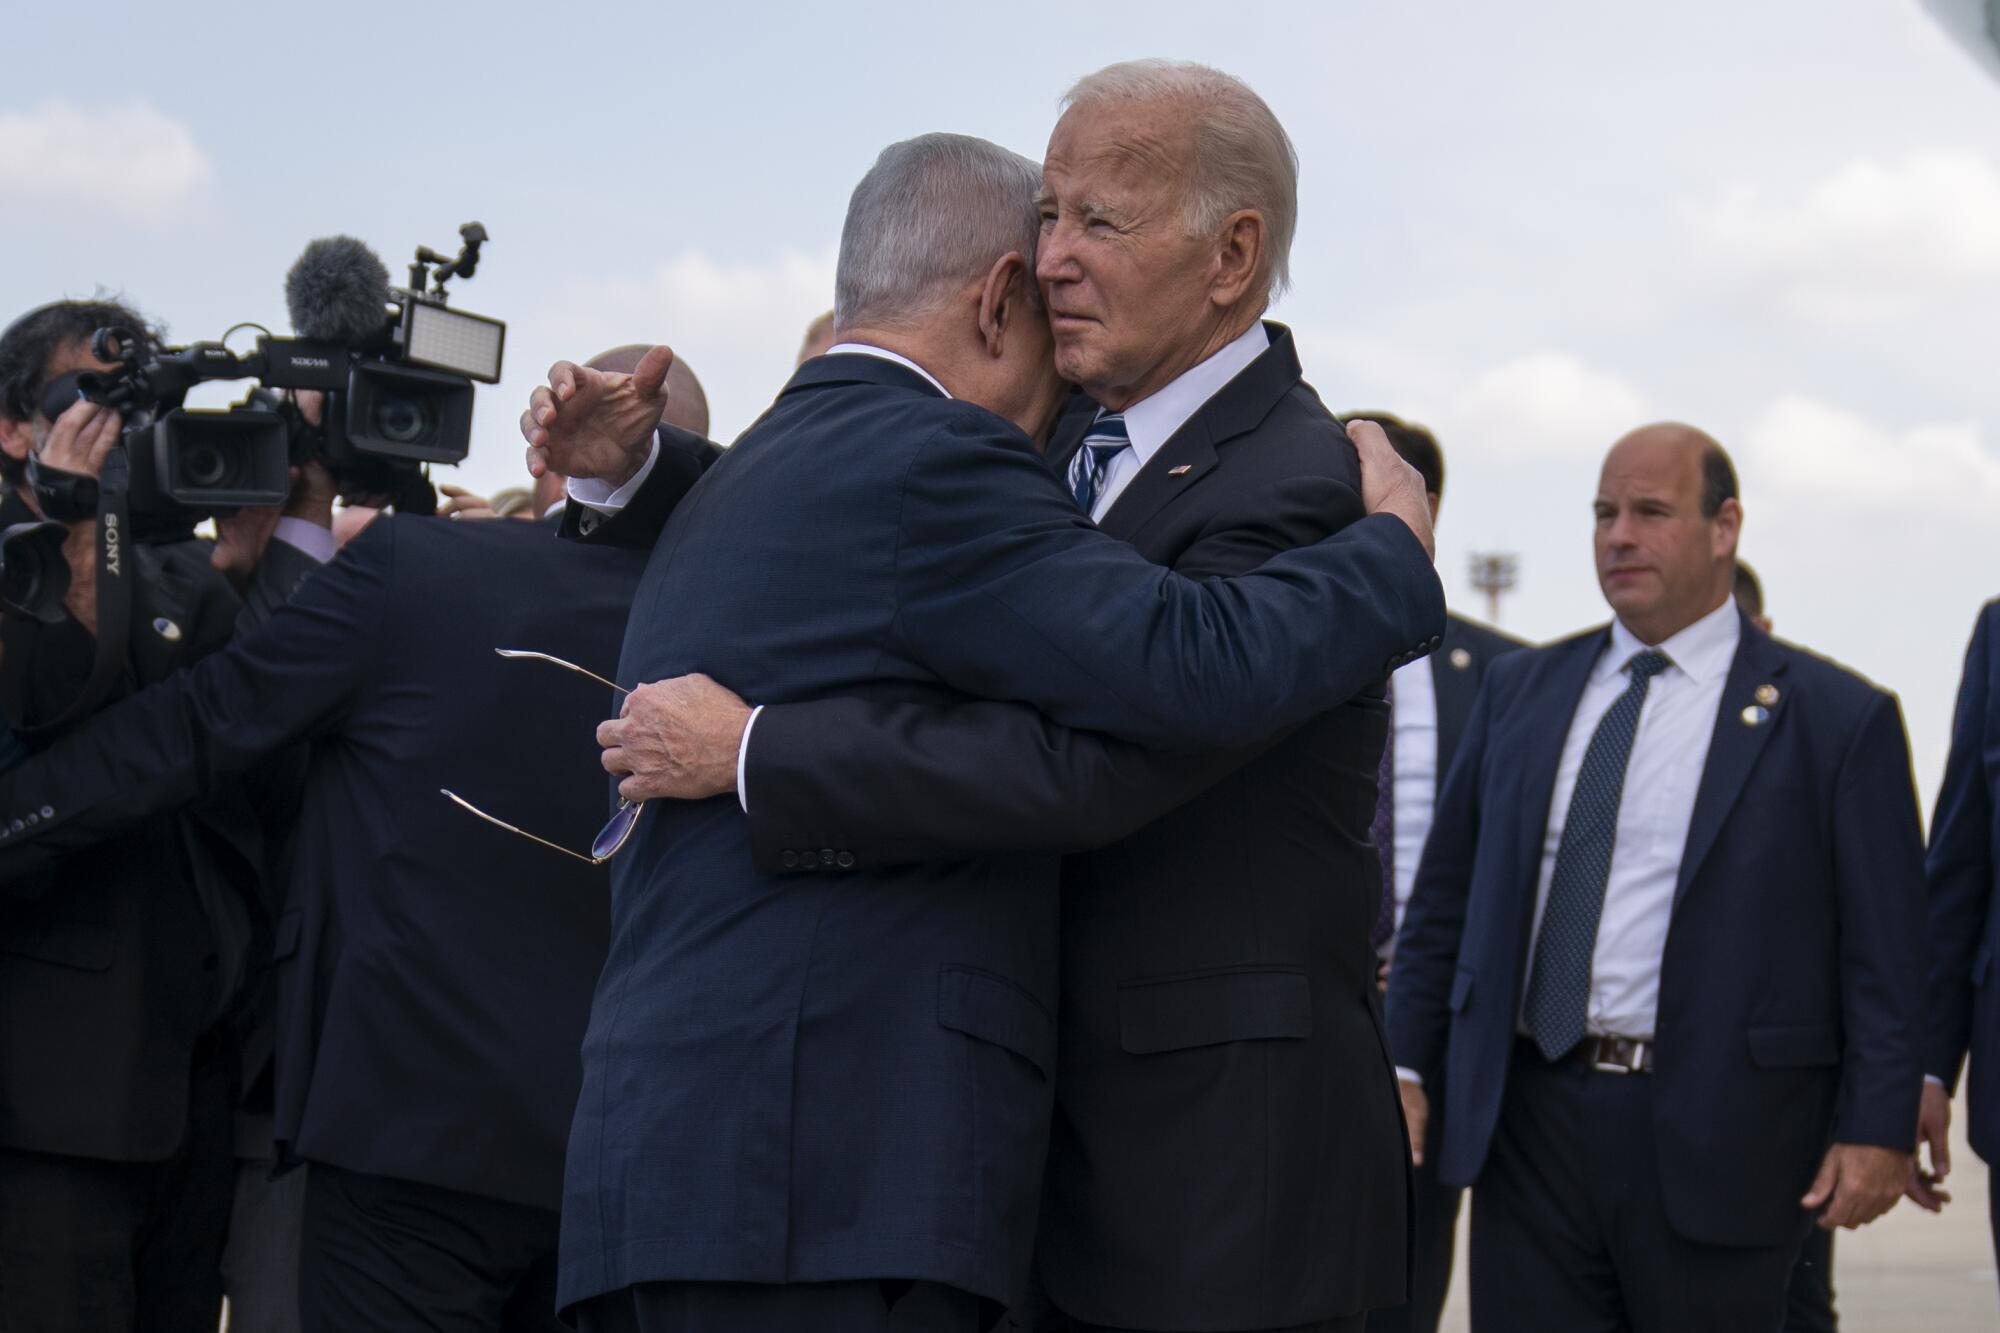 President Biden embracing Israeli Prime Minister Benjamin Netanyahu